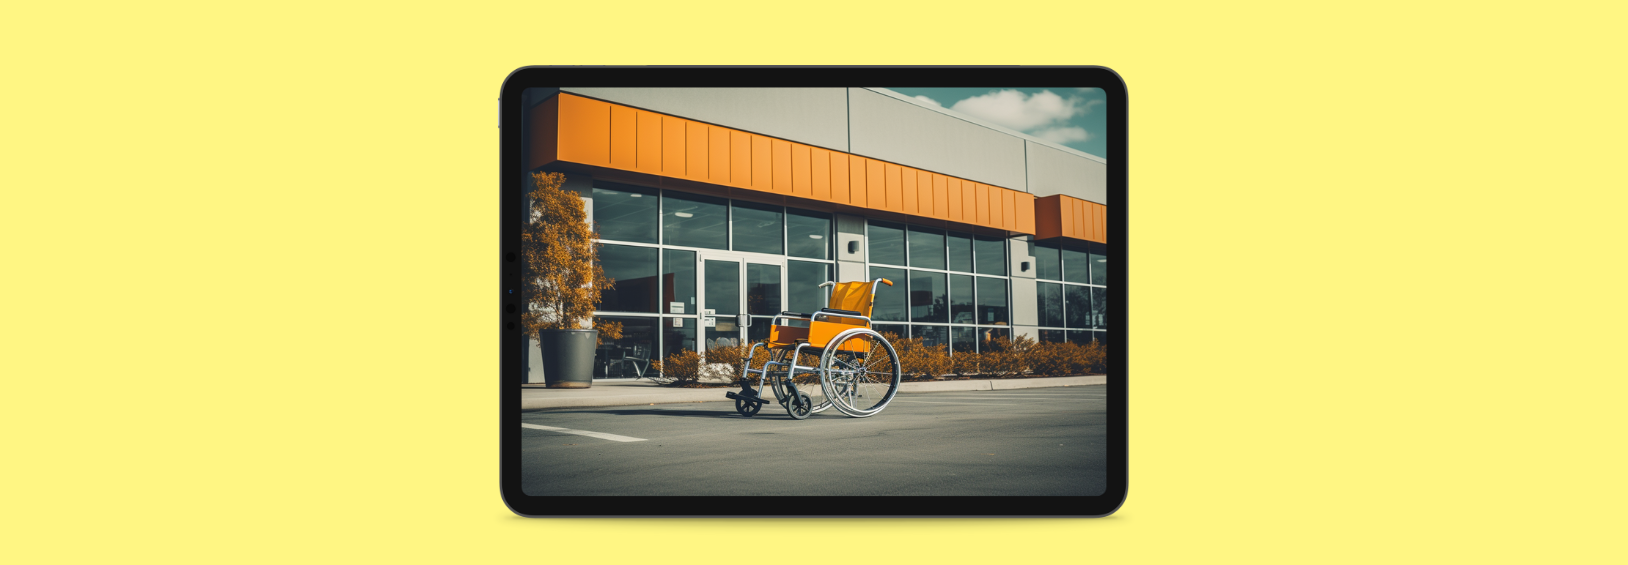 Wheelchair in a self storage parking lot